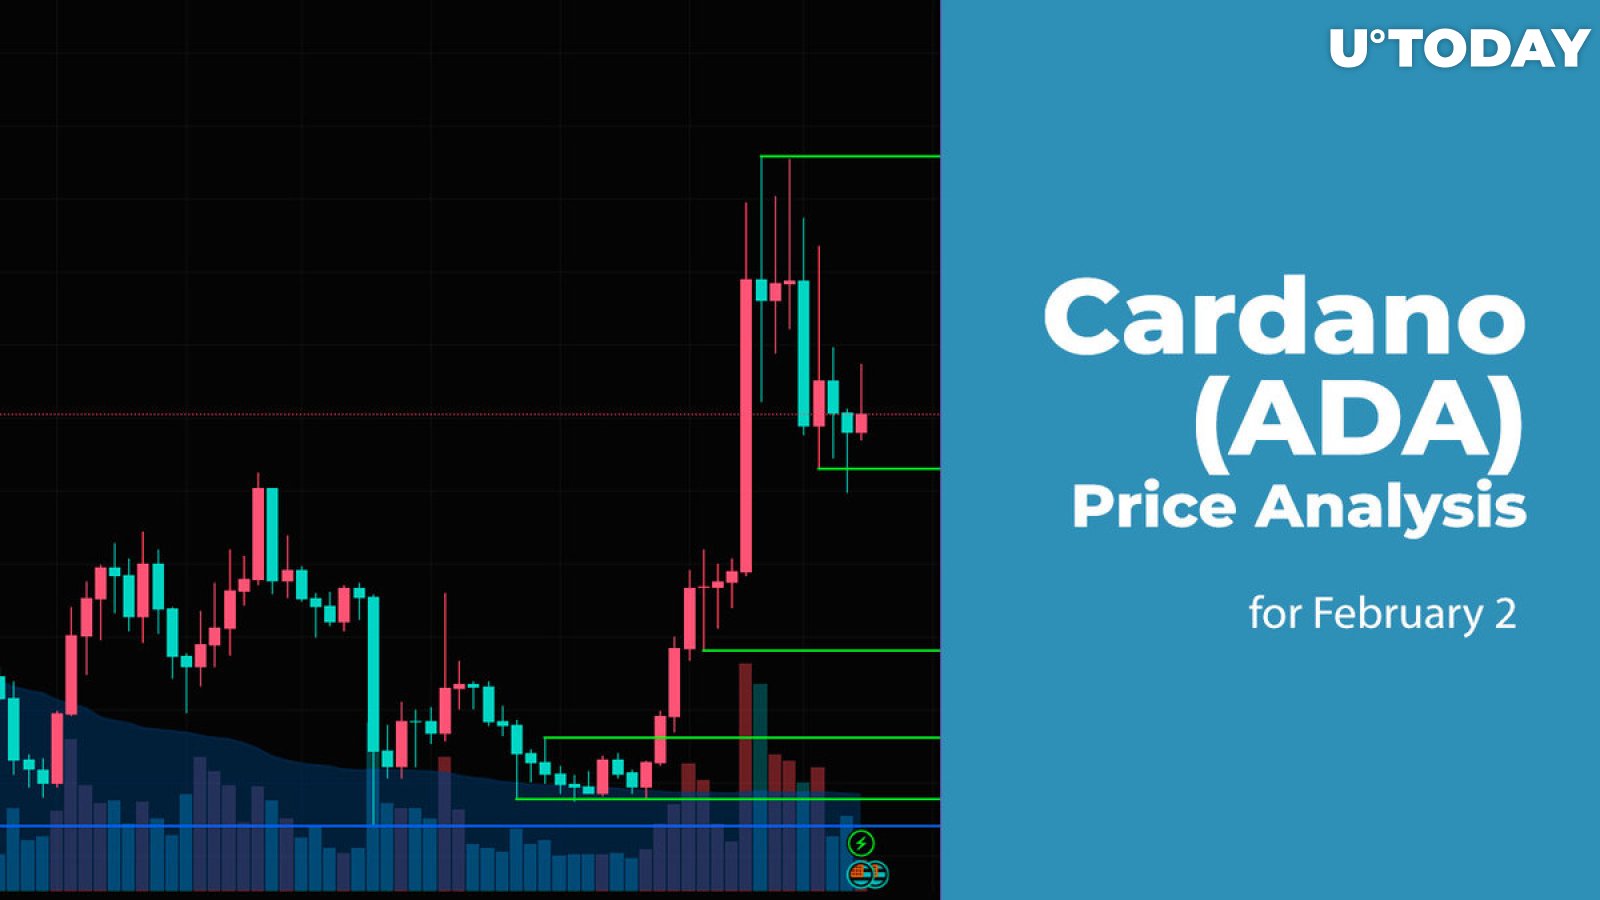 Cardano (ADA) Price Analysis for February 2